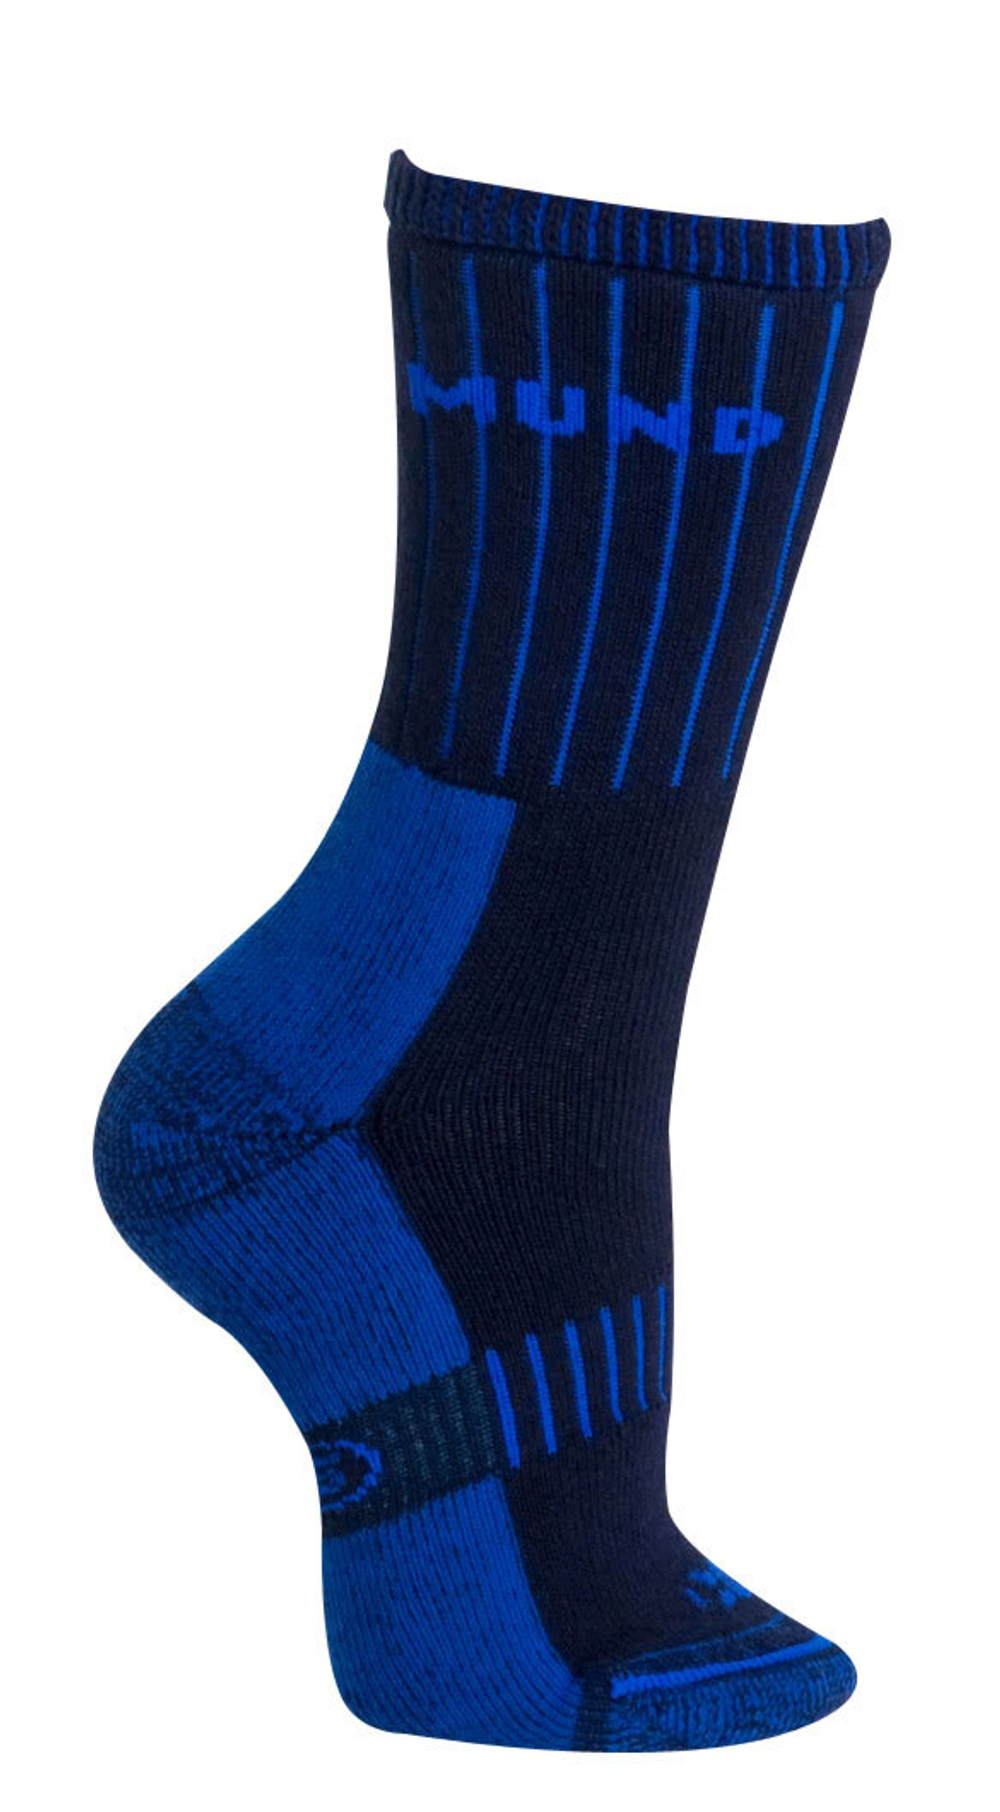 детские носки MUND, 20 Teide, цвет темно-синий, размер S (29-33)